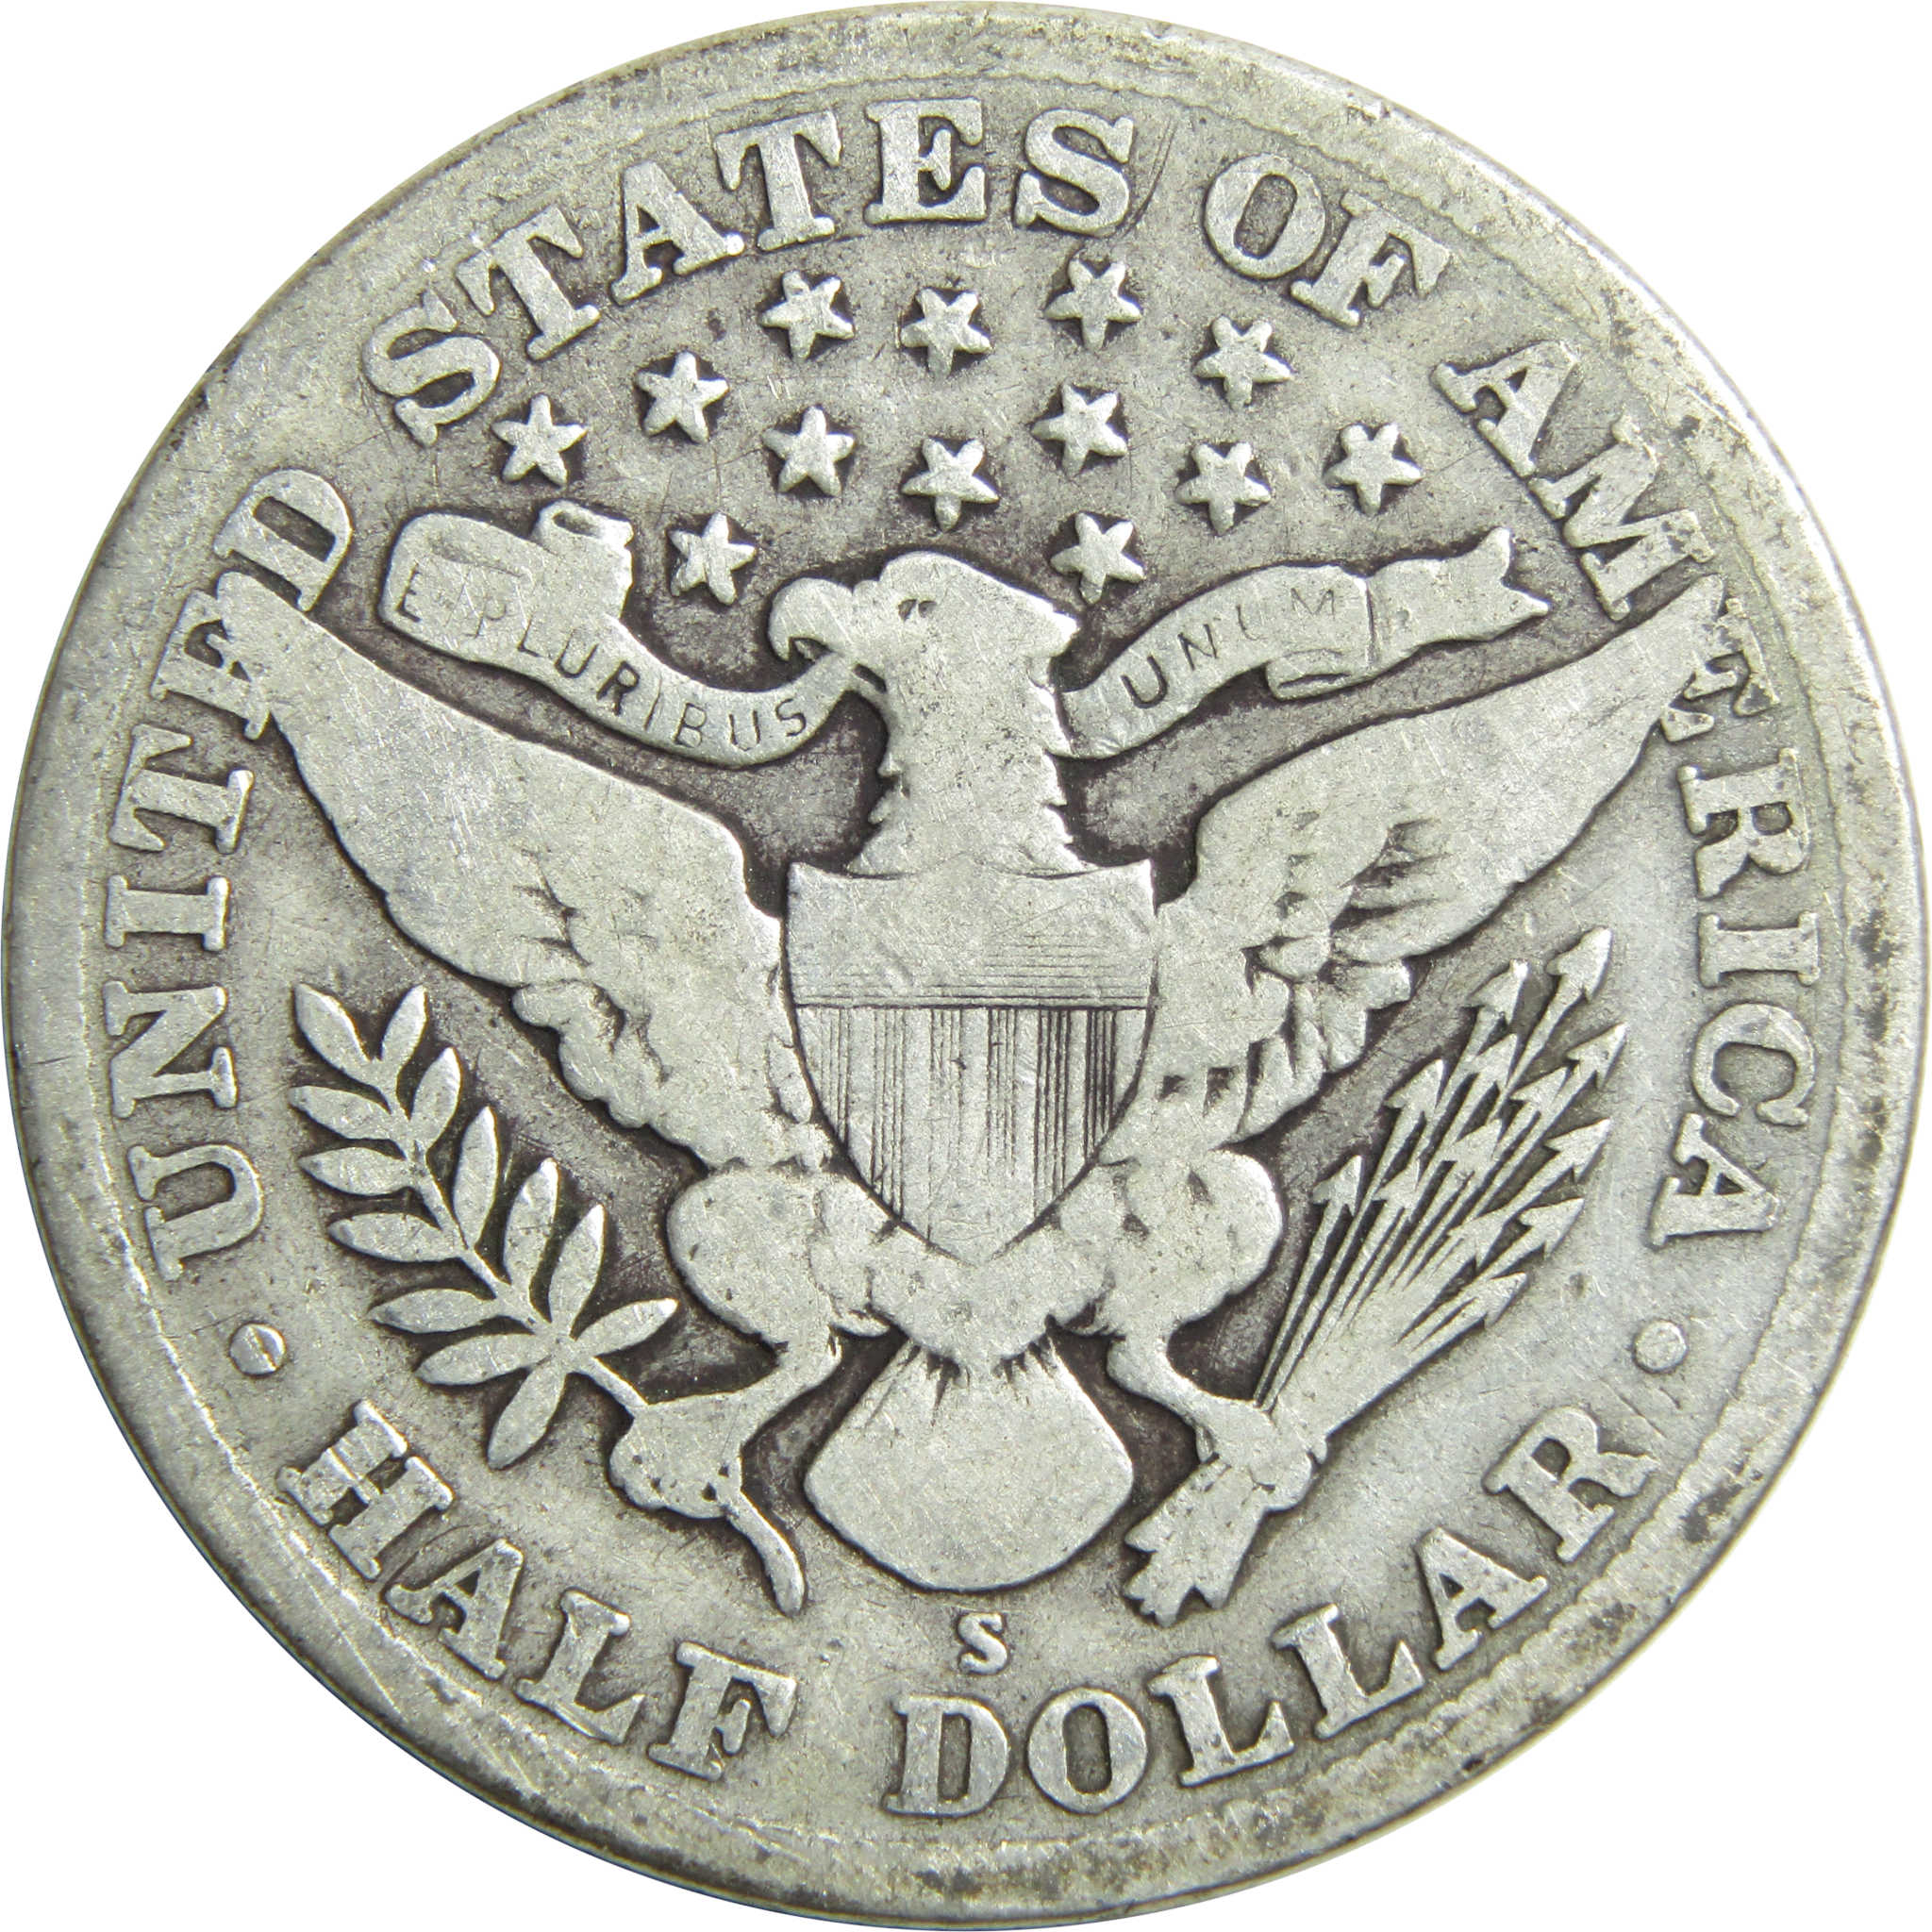 1912 S Barber Half Dollar VG Very Good Silver 50c Coin SKU:I13253